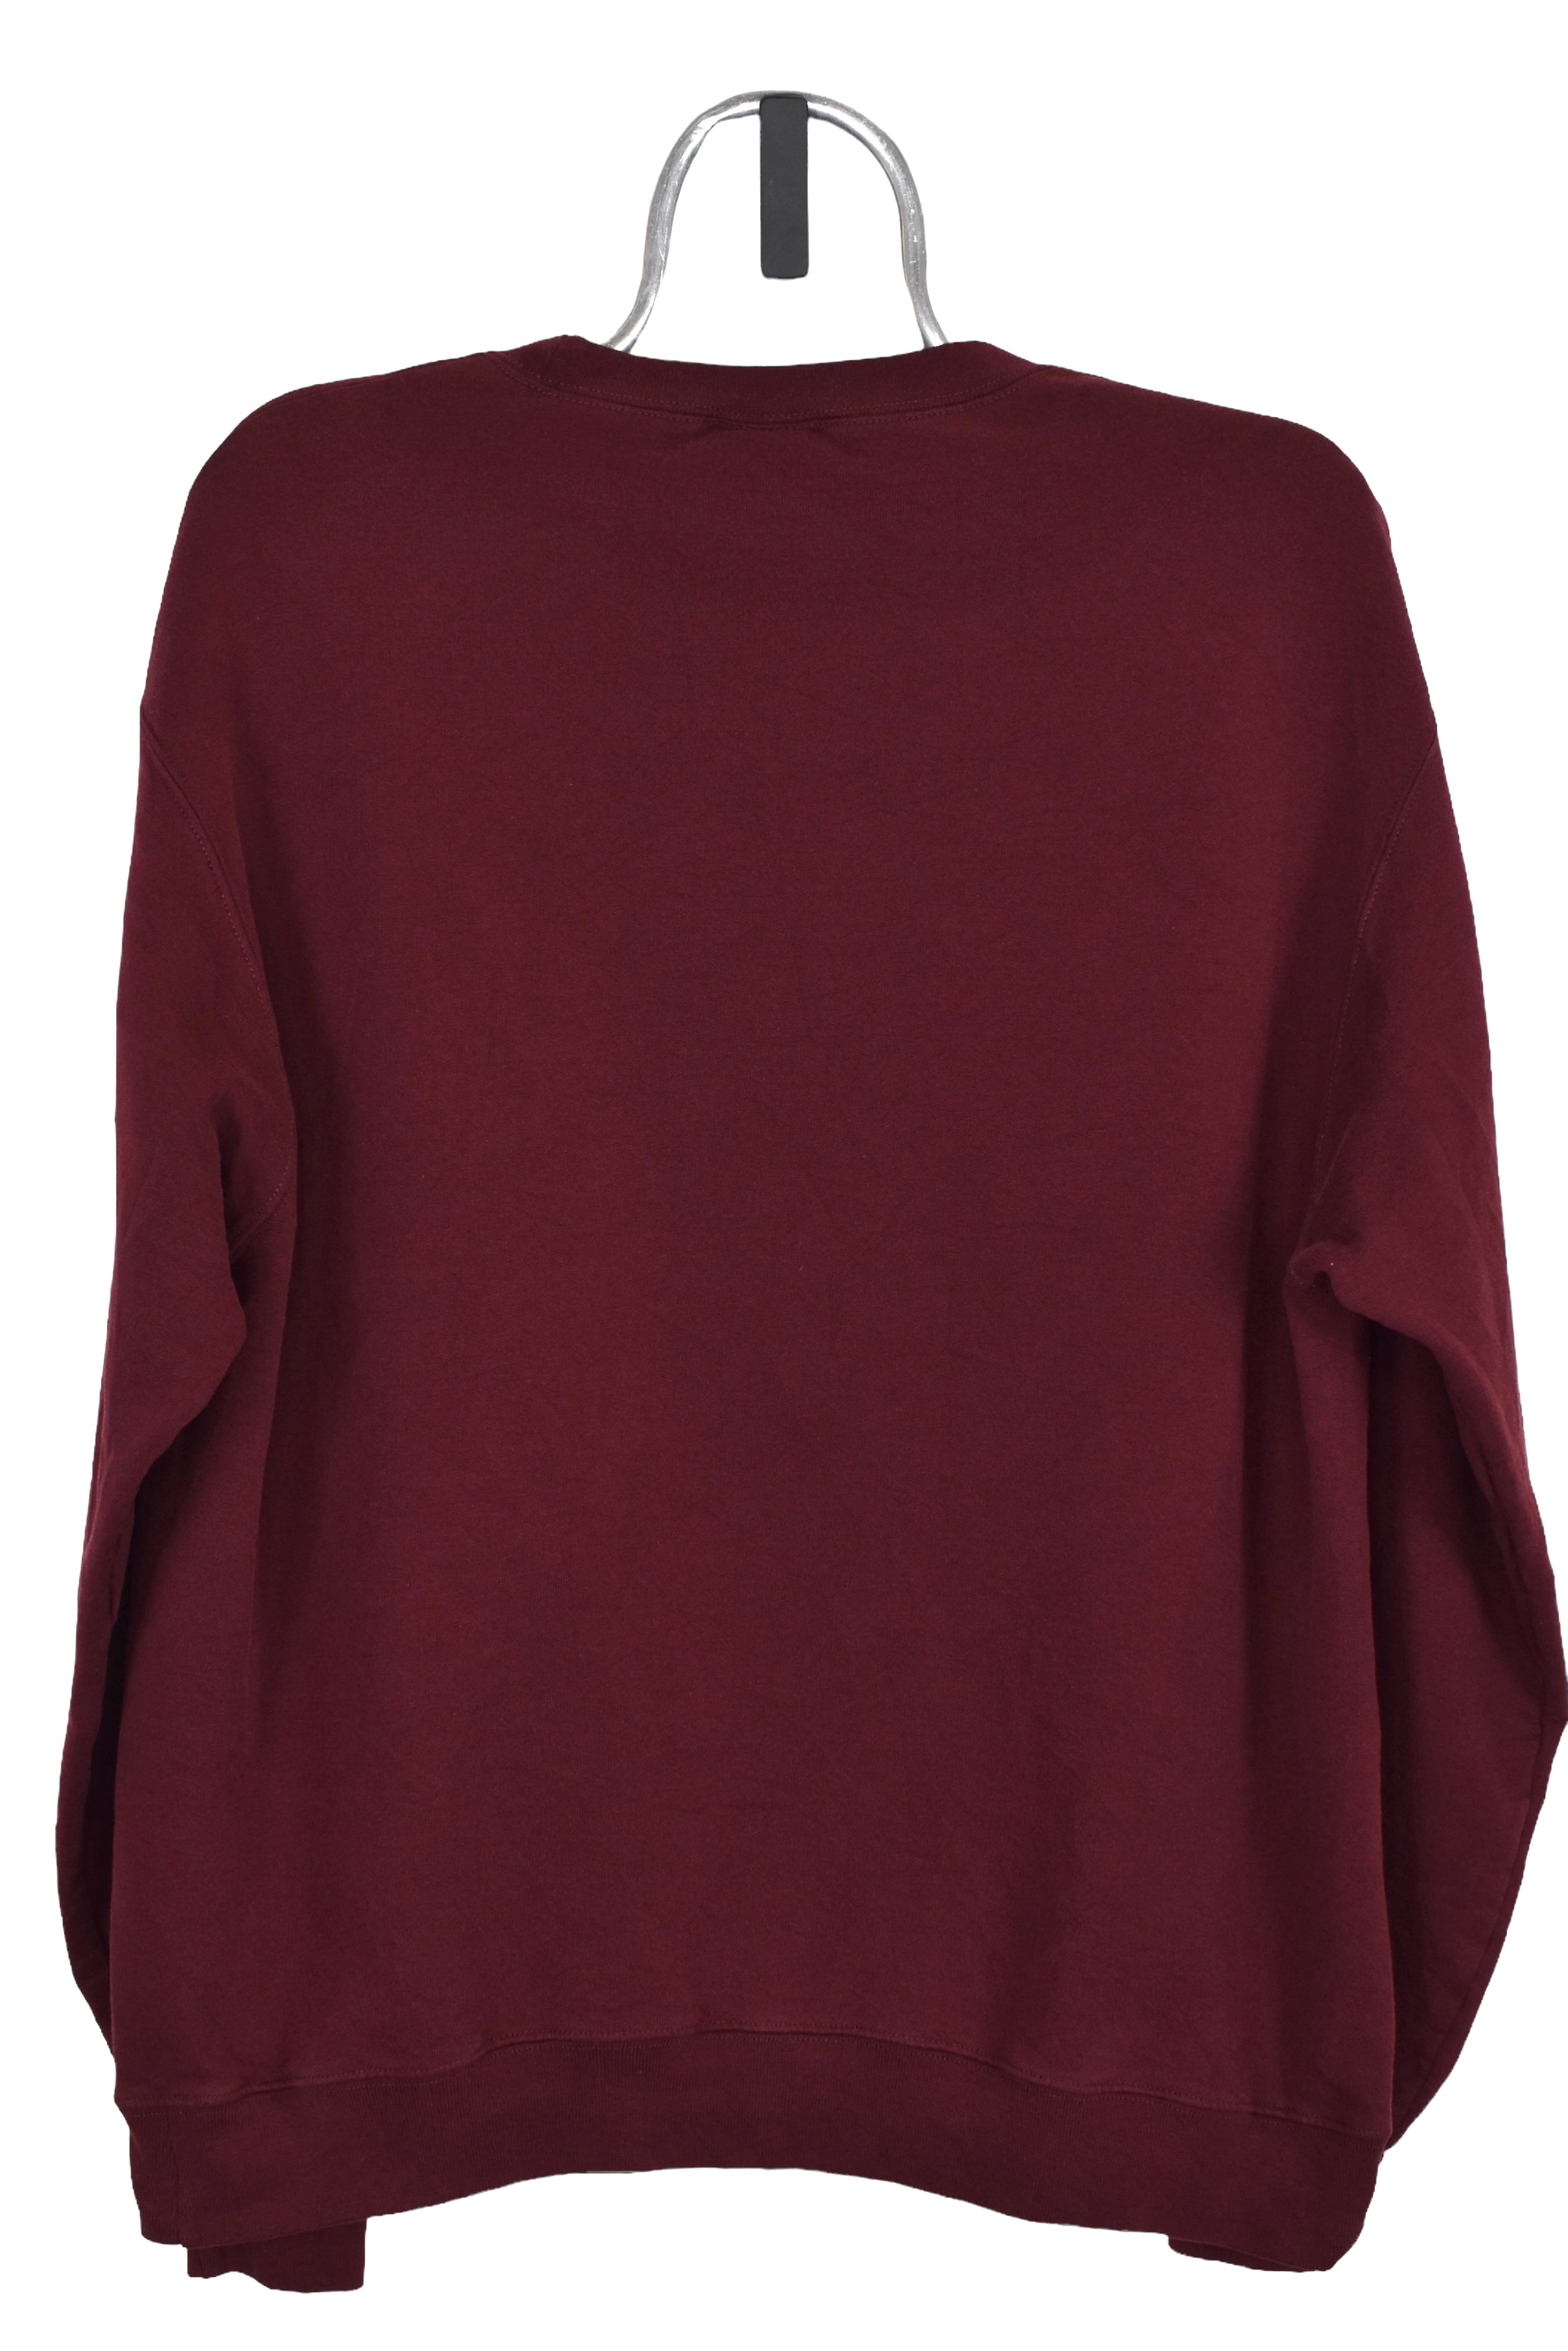 Vintage Texas A&M University sweatshirt Large, burgundy graphic crewneck